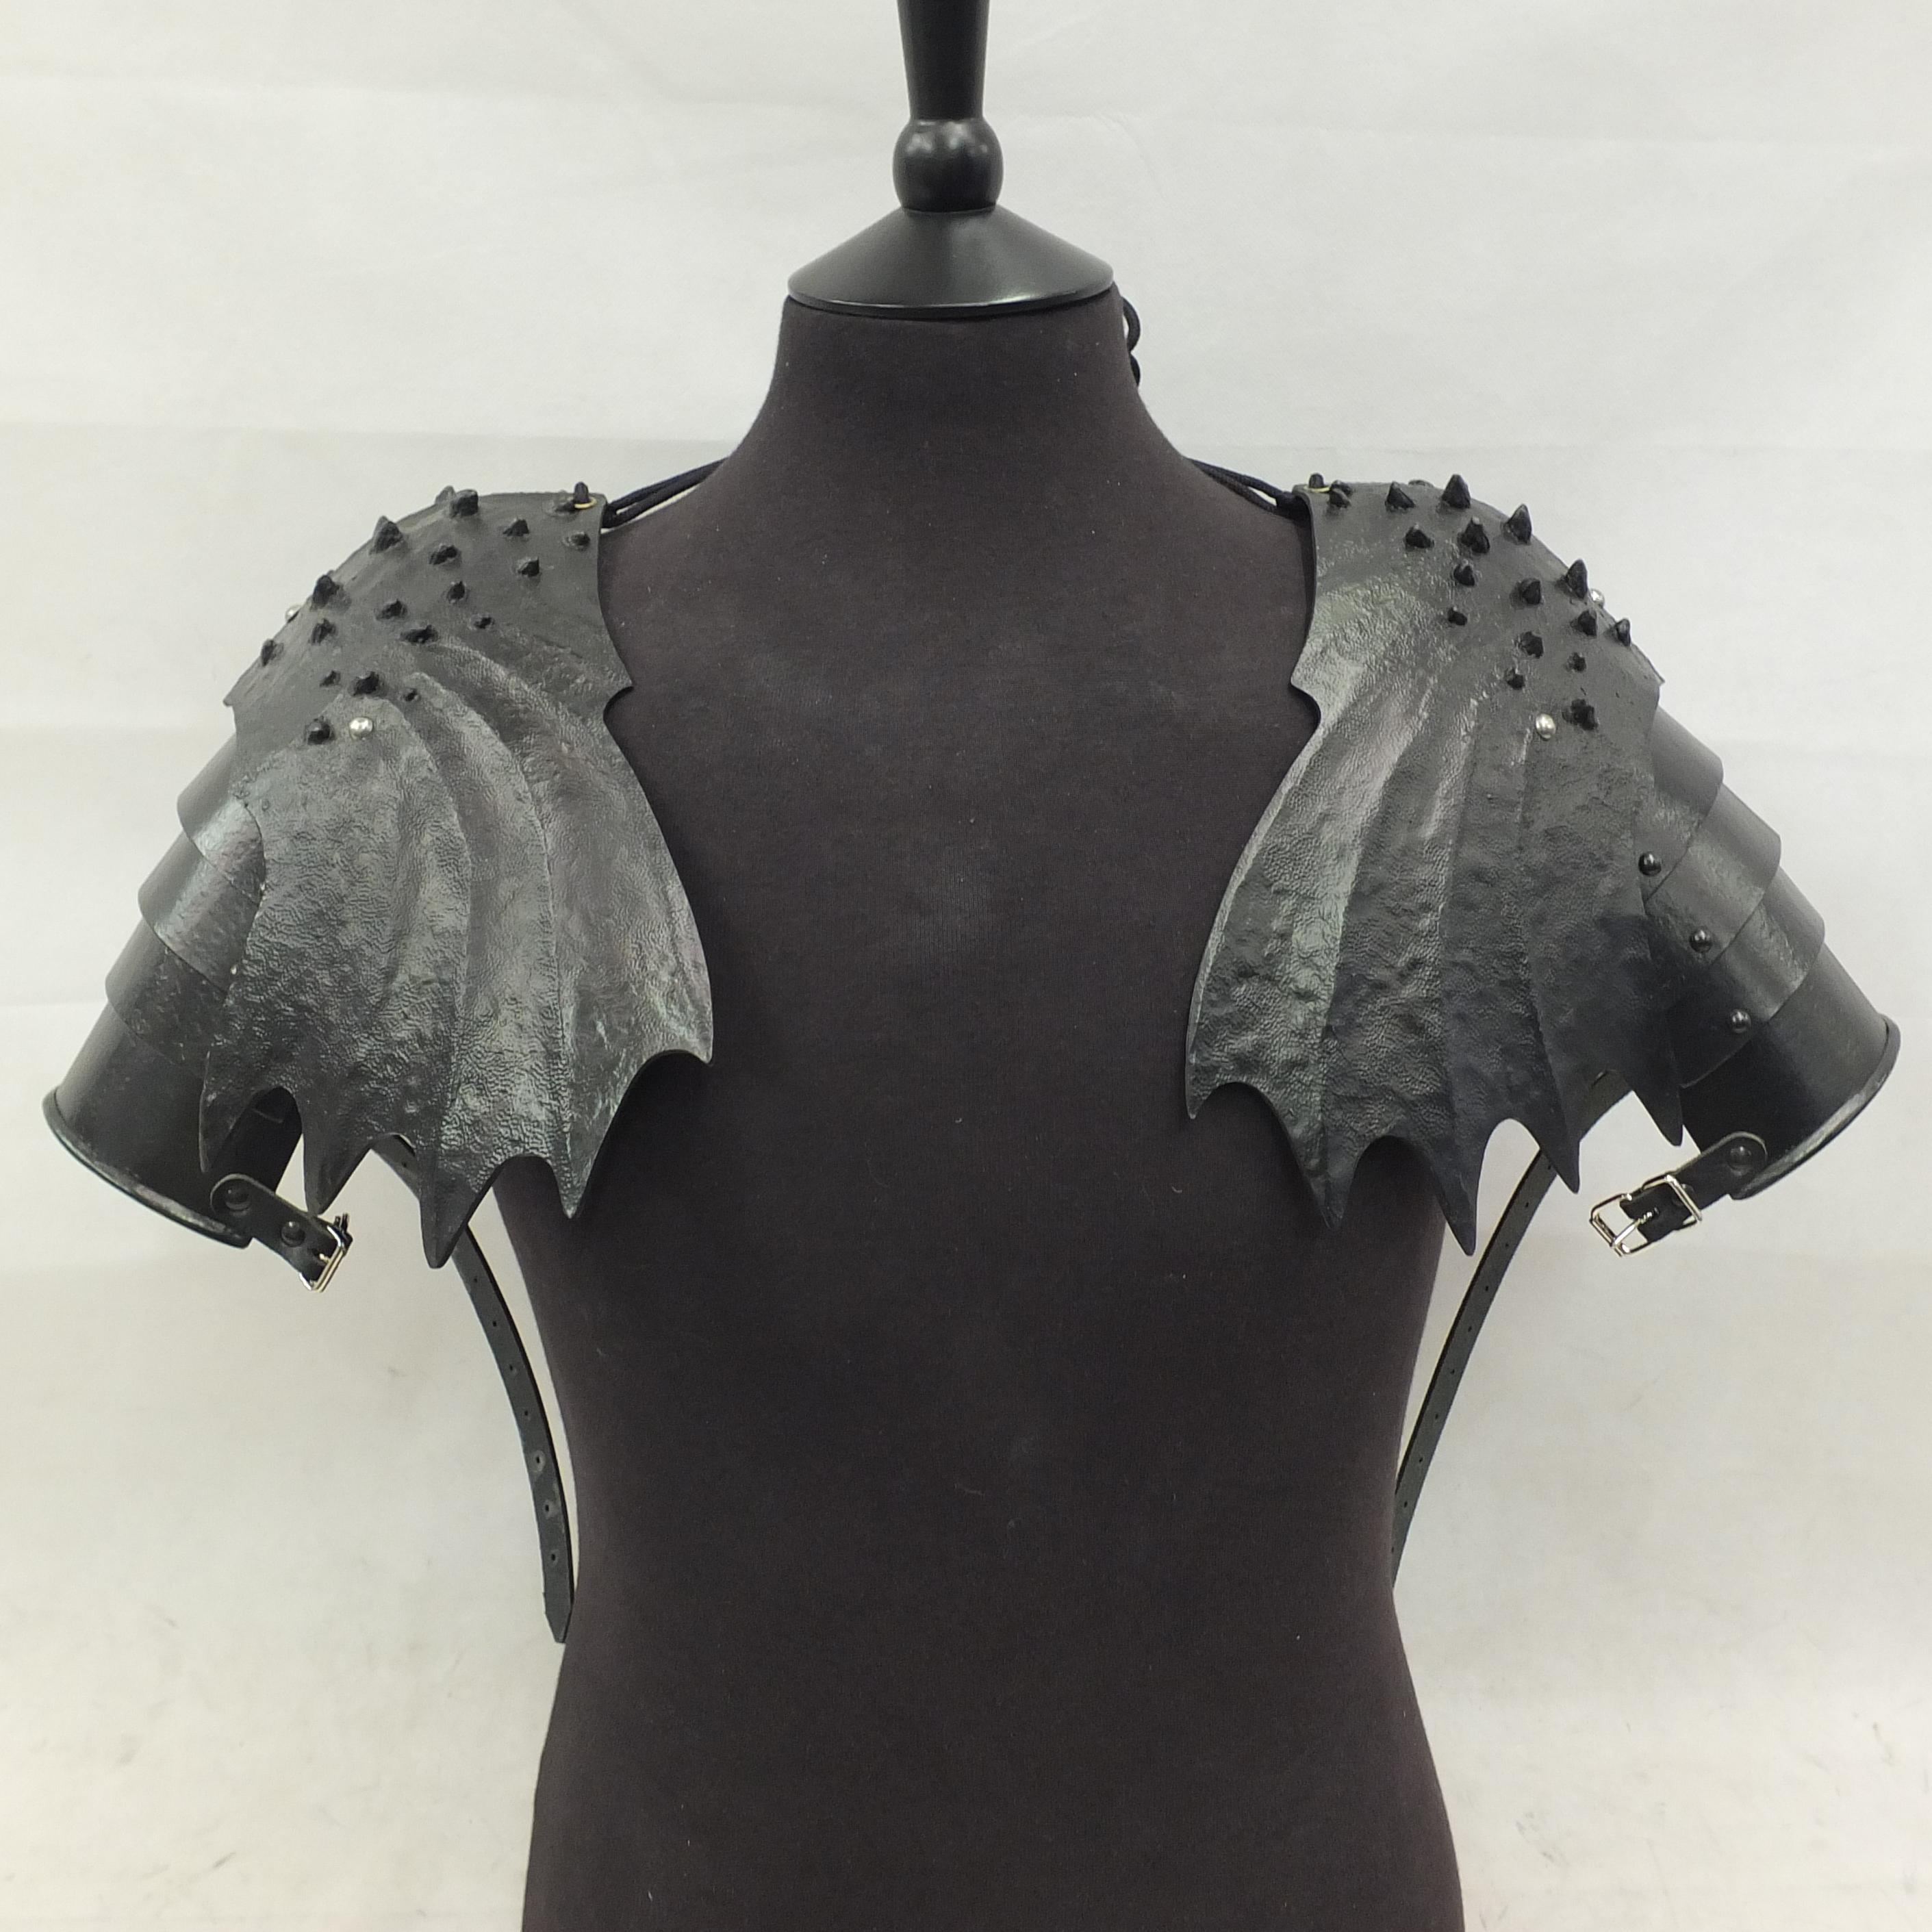 Winged larp shoulder armour